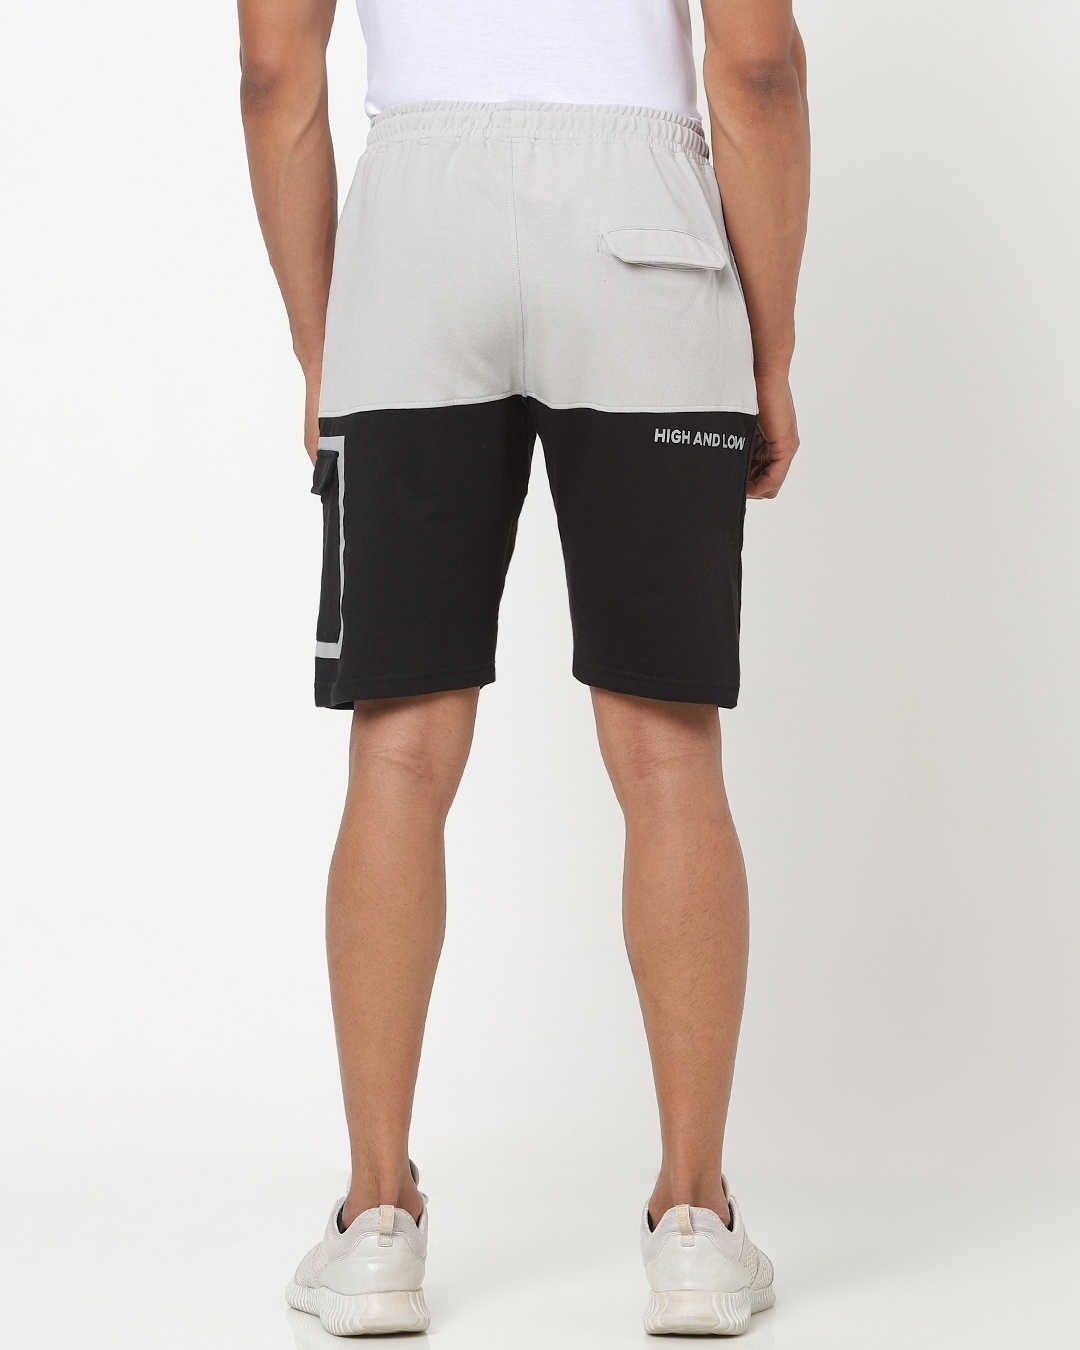 Shop Black and Grey Colorblock Shorts-Design